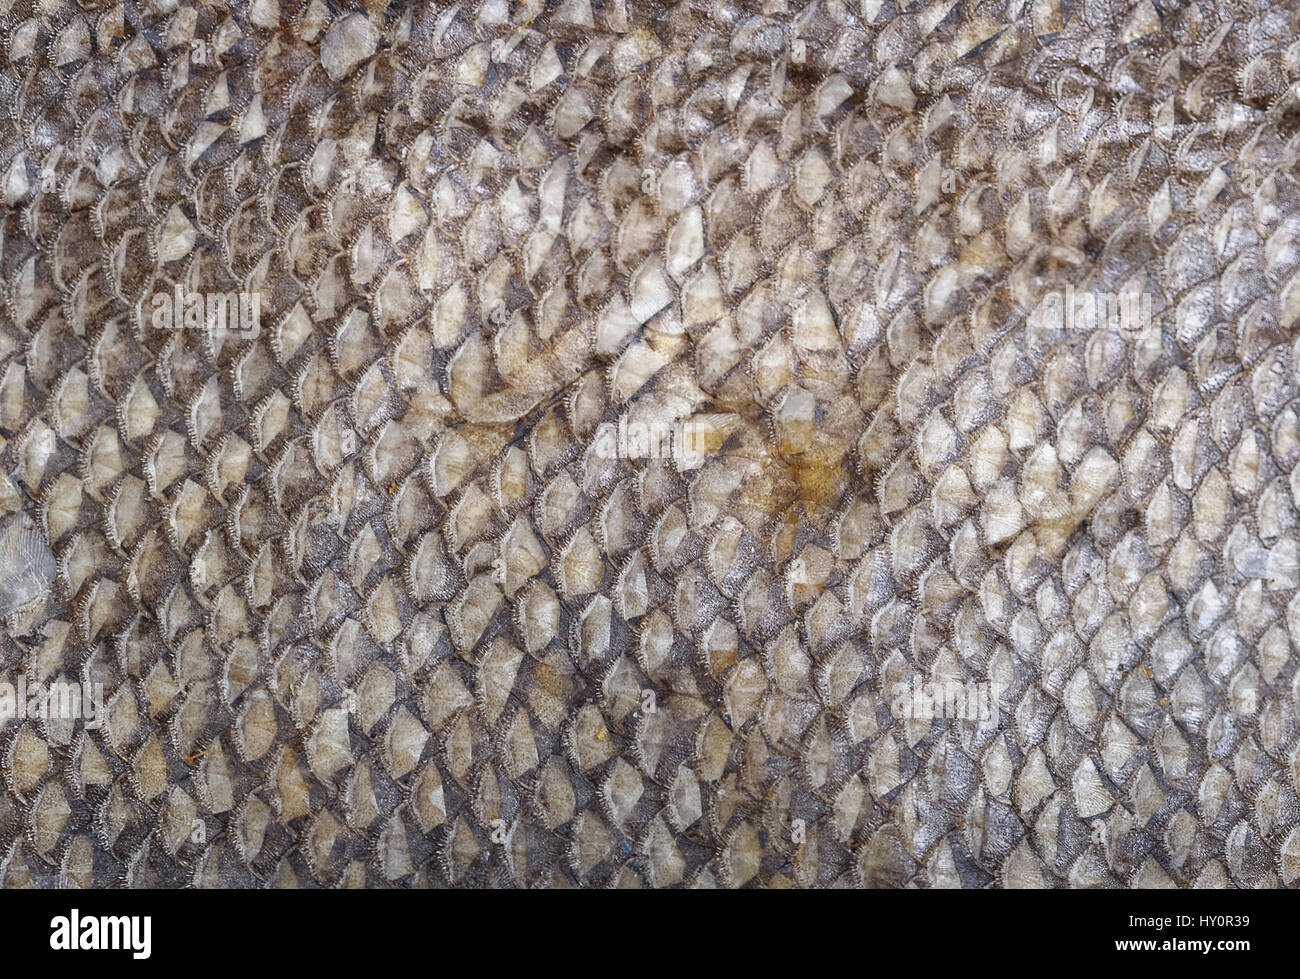 Fish scales texture Stock Photo - Alamy